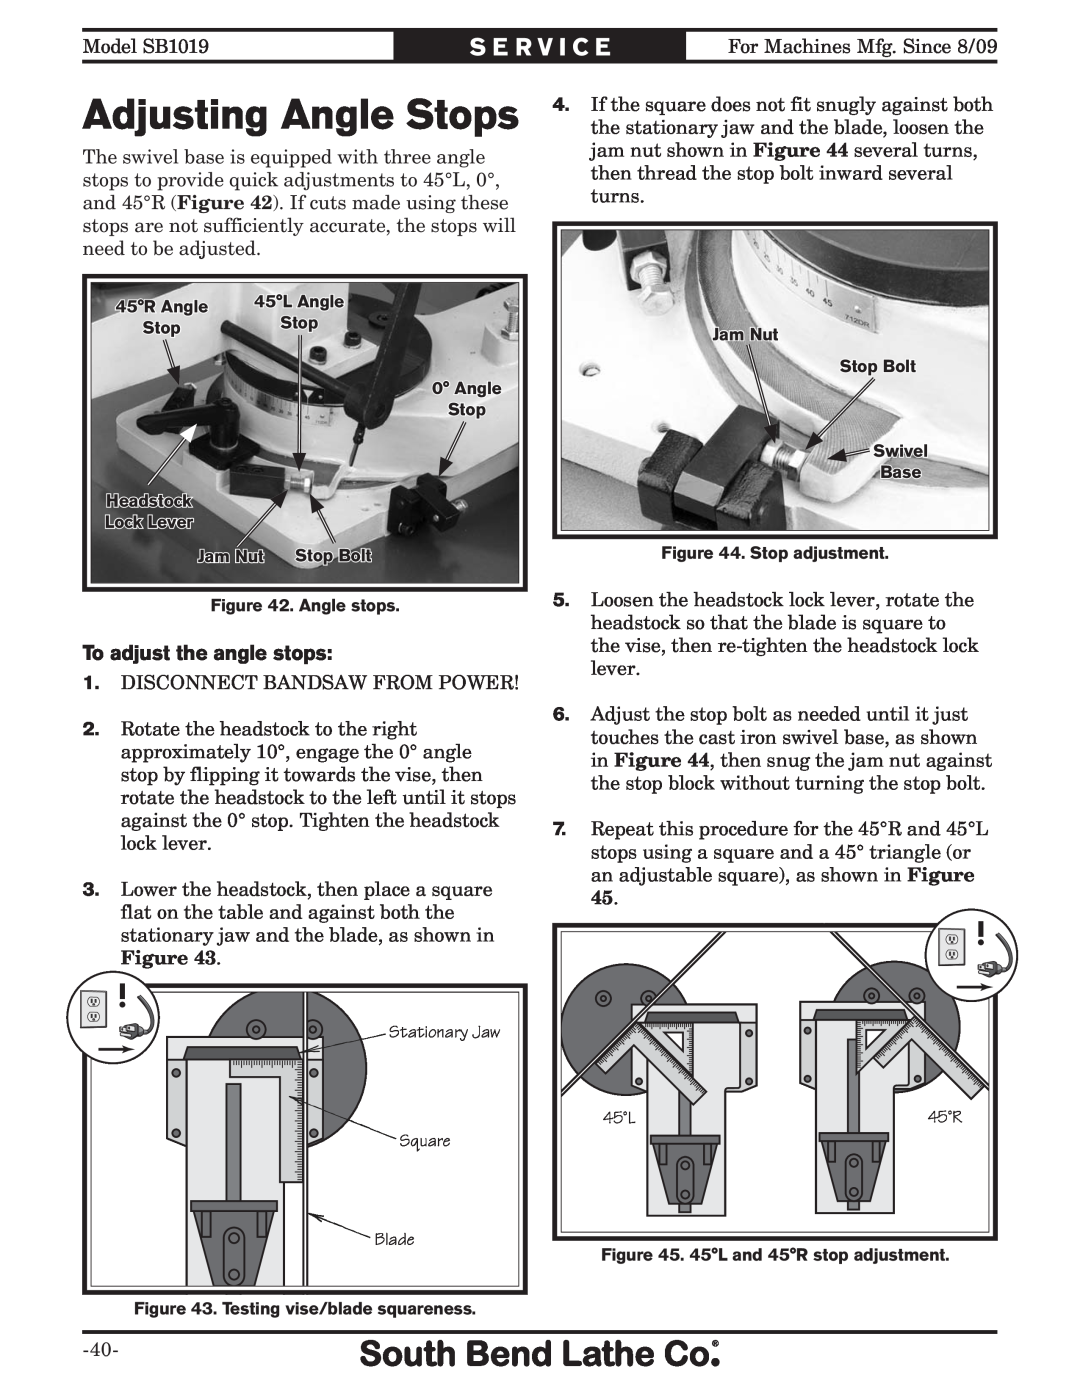 Southbend SB1019 owner manual Adjusting Angle Stops, To adjust the angle stops, S E R V I C E 